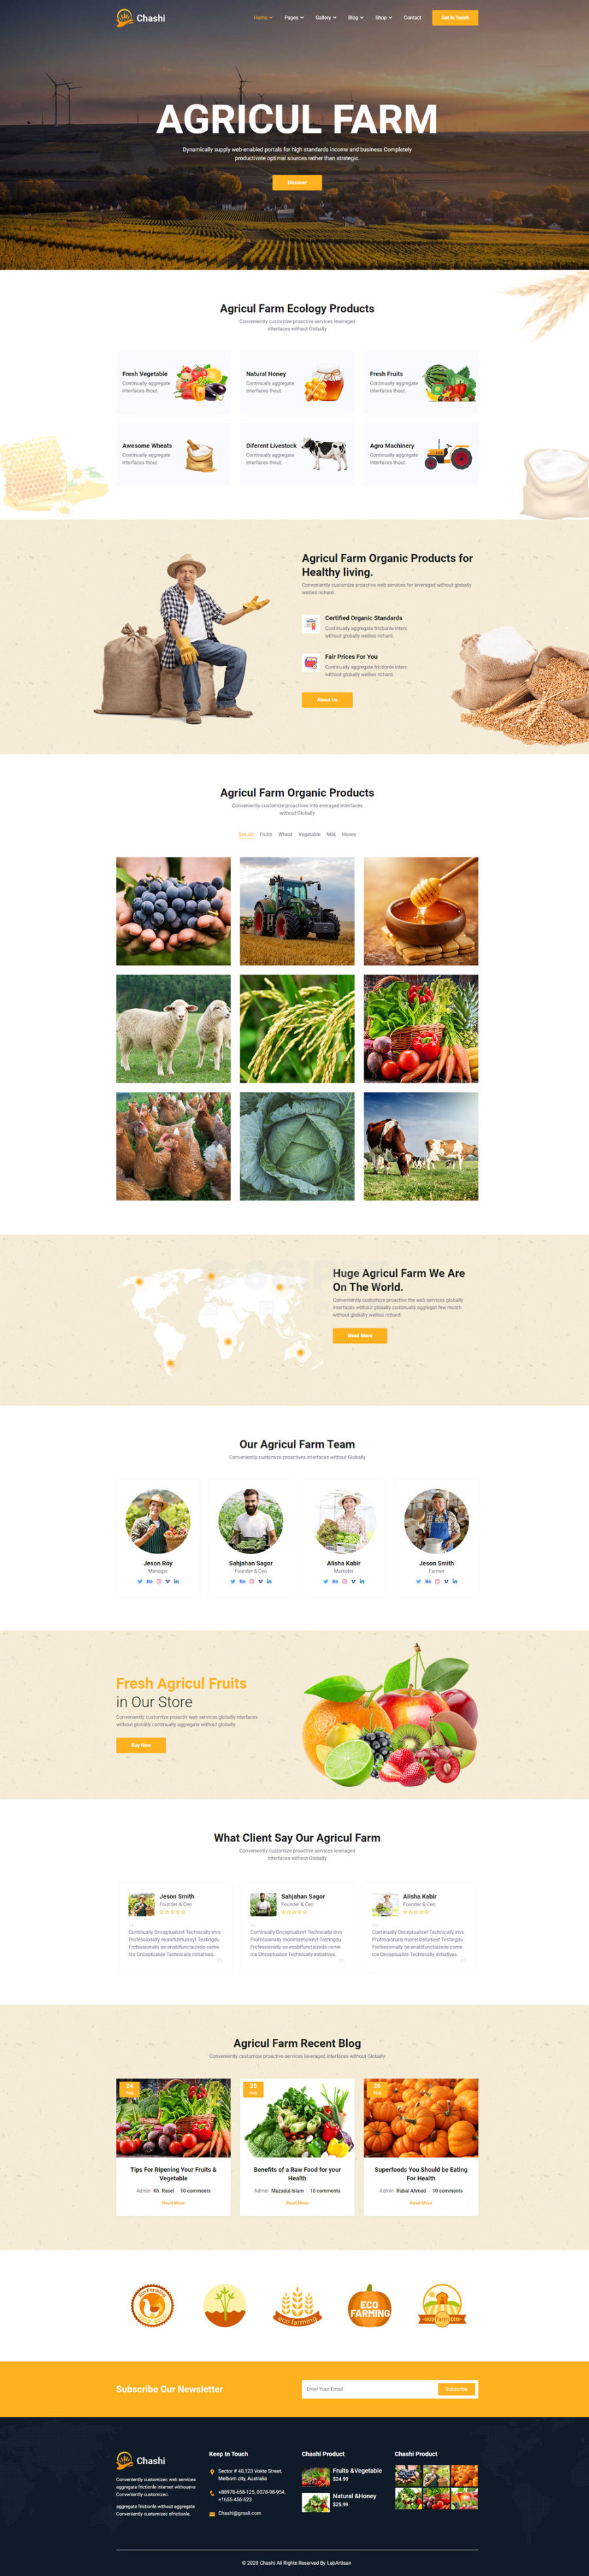 Chashi生态稻谷农场有机产品展示网页模板html